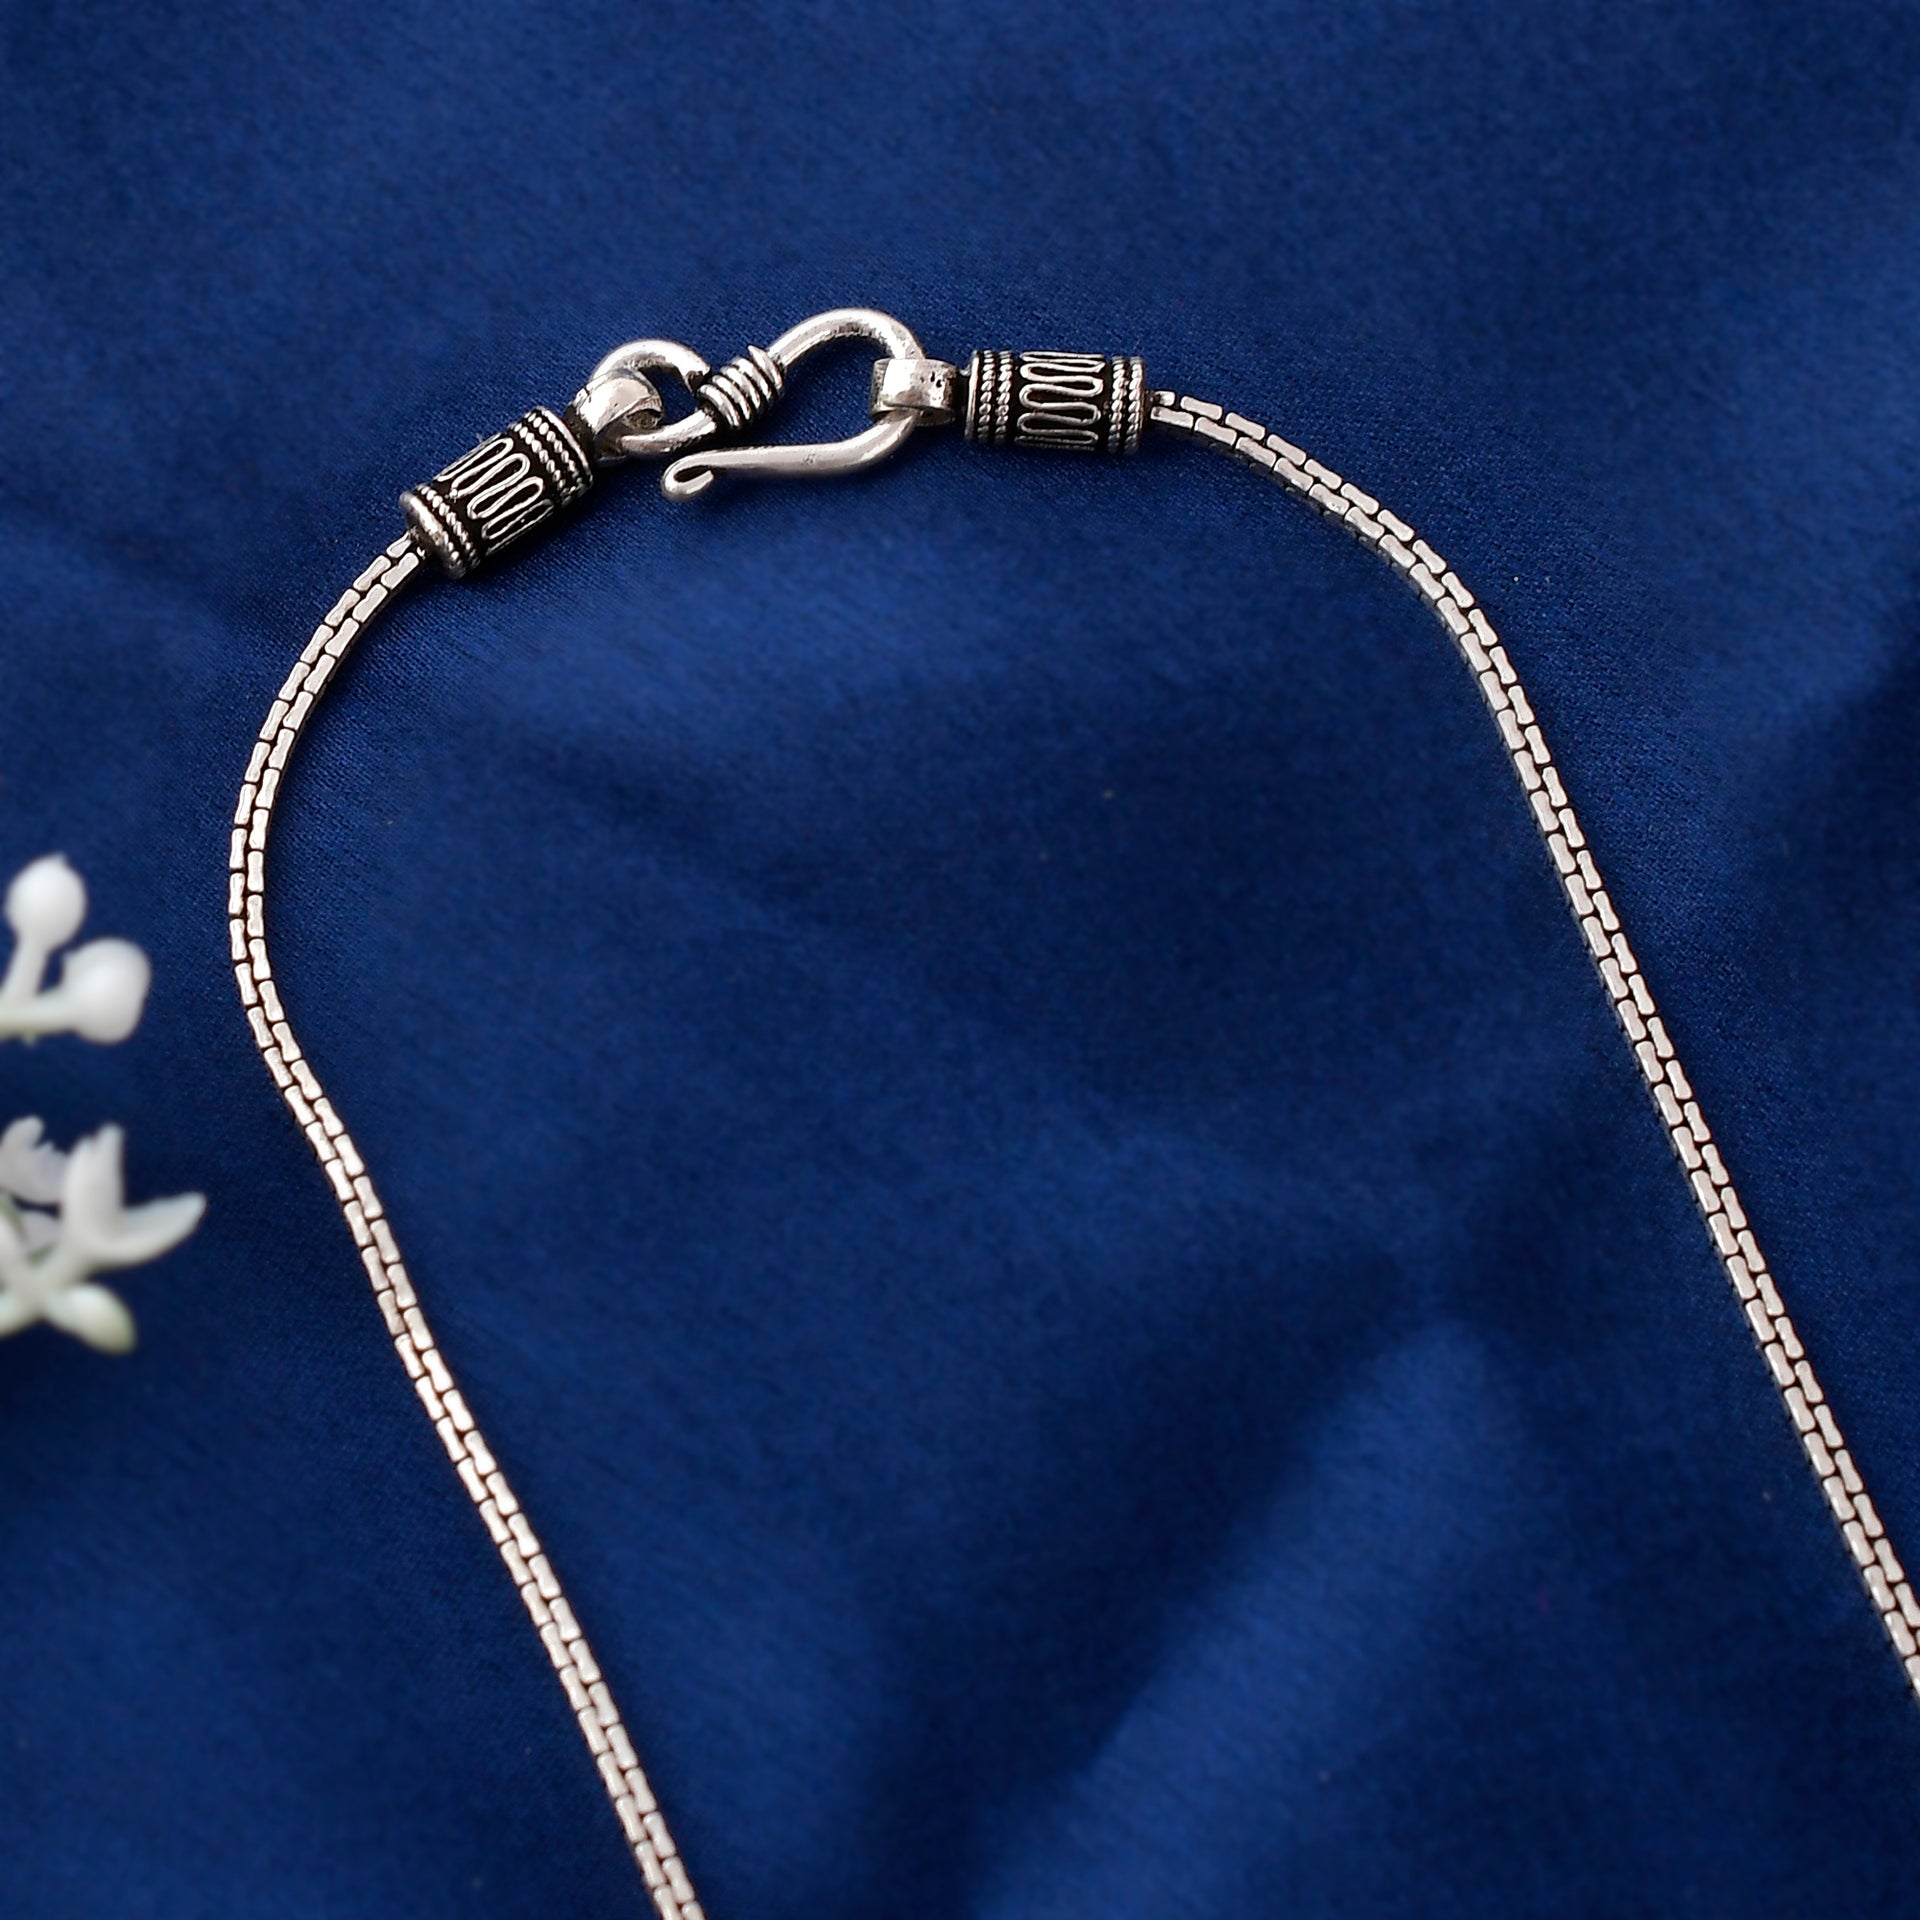 24 Inch 925 Sterling Silver Men's Chain Necklace - NKM6767-24SVJJJ